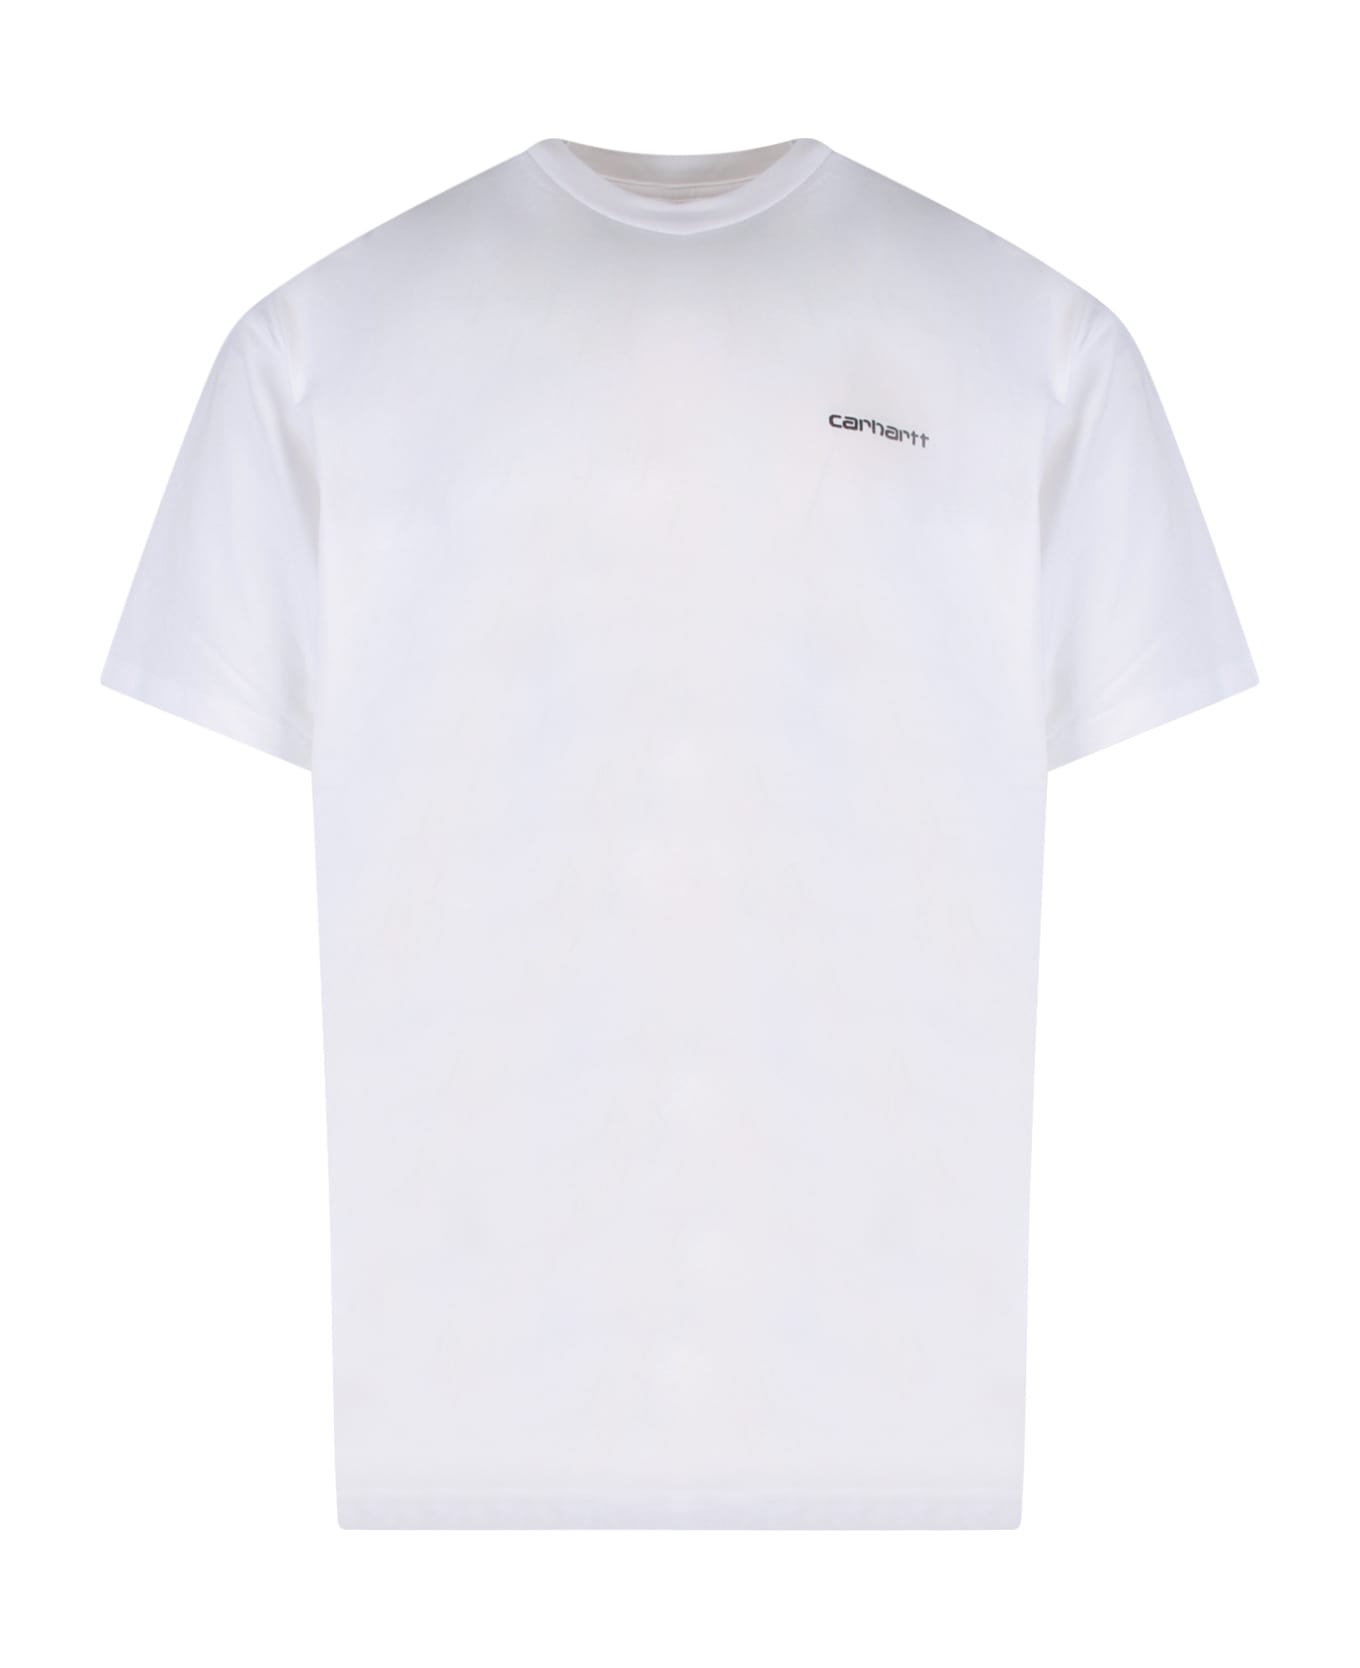 Carhartt Script Embroidery T-shirt - White シャツ